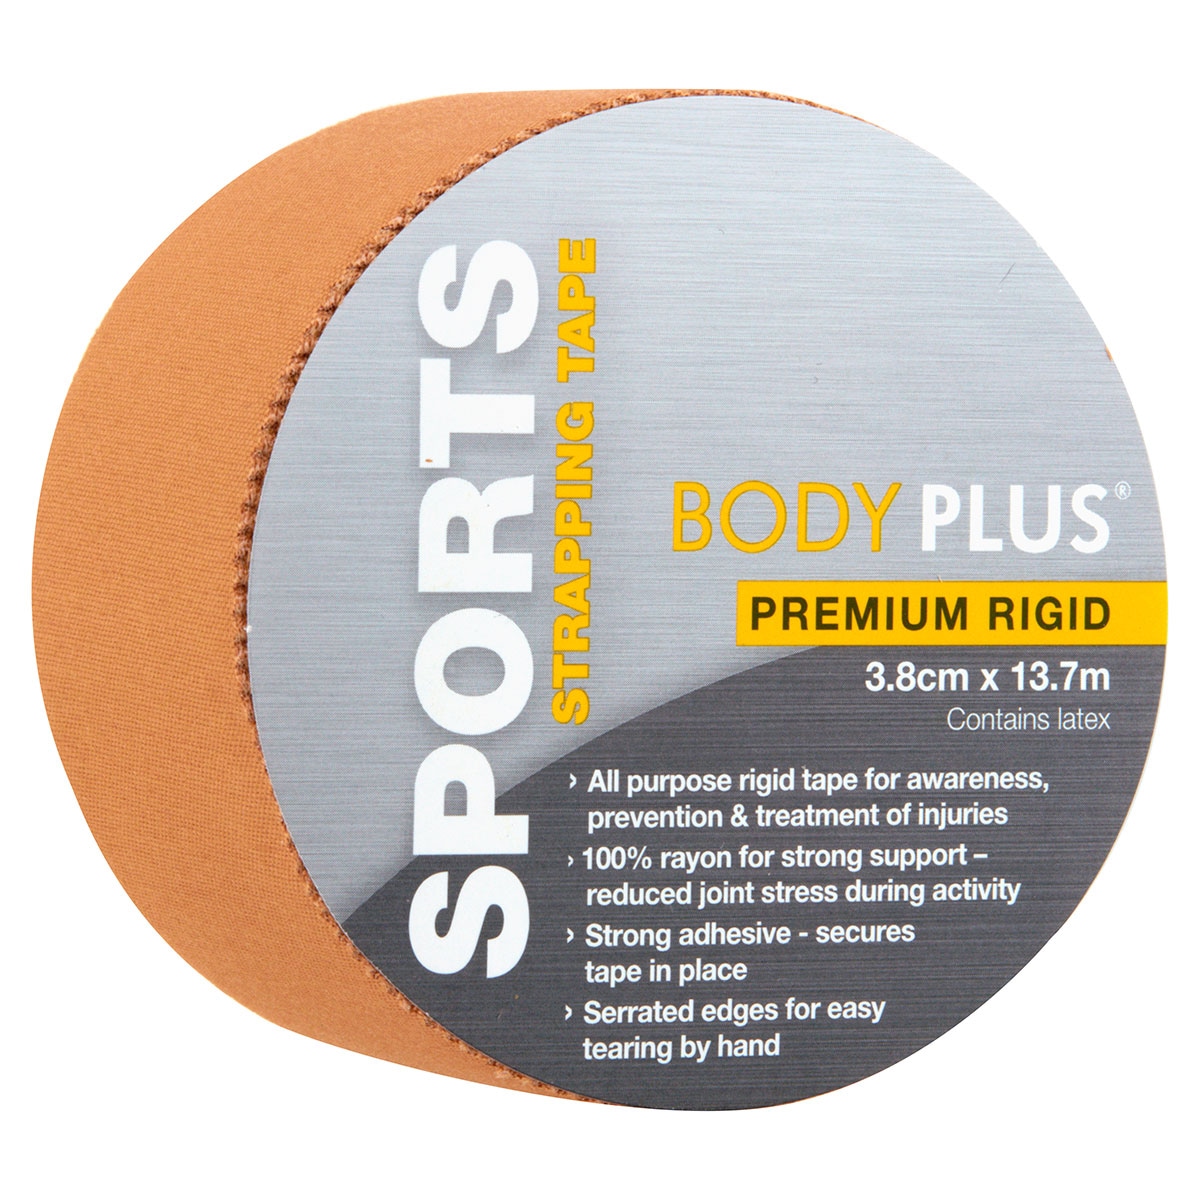 Body Plus Premium Rigid Sports Strapping Tape 3.8cm x 13.7m